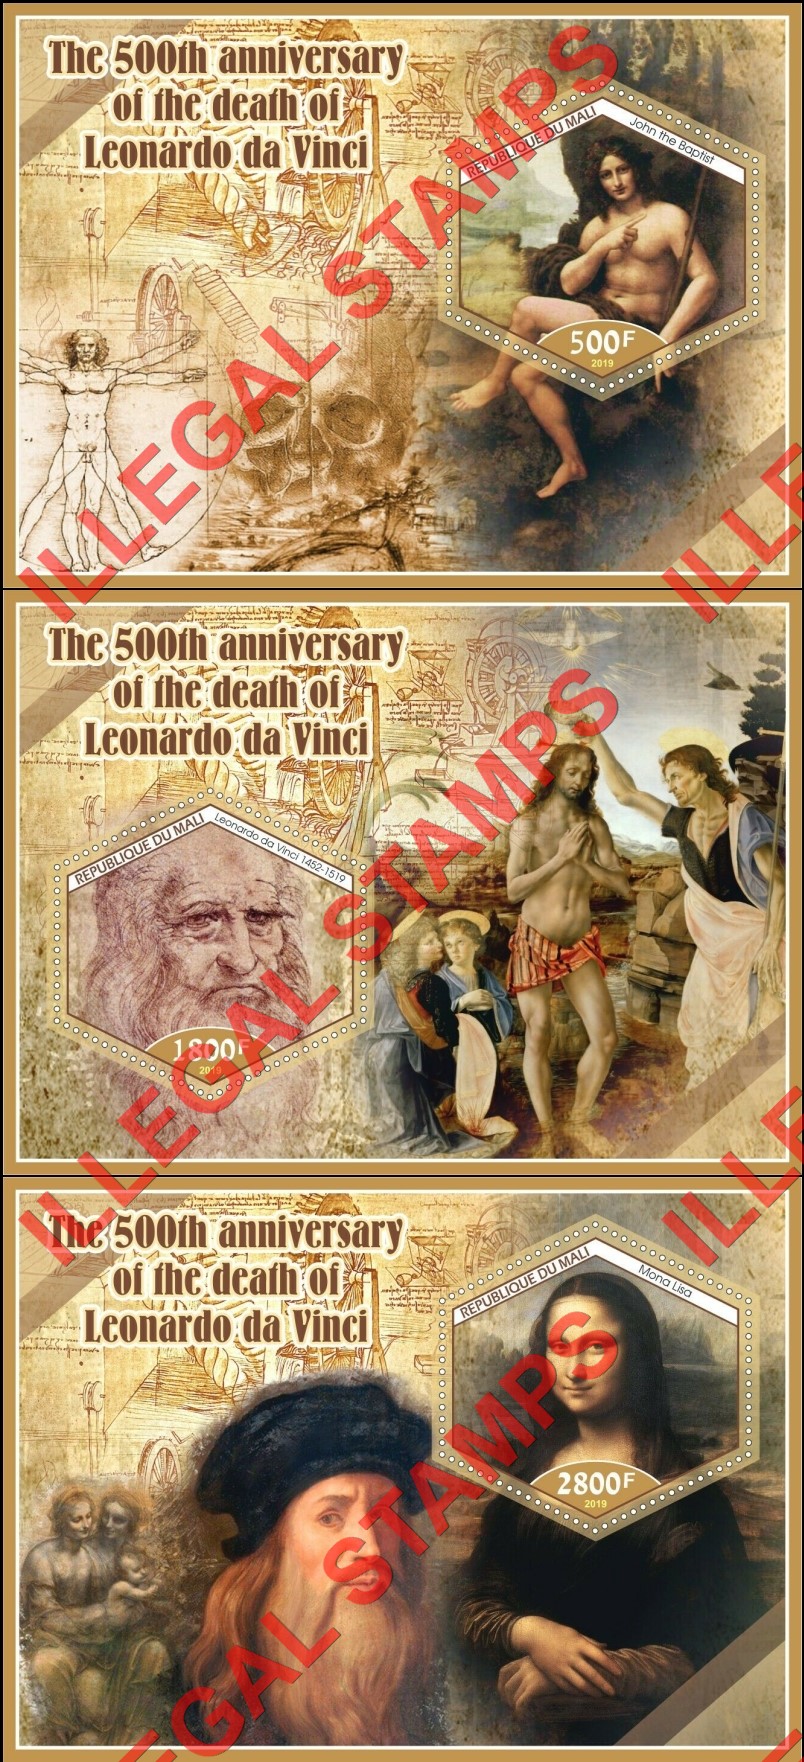 Mali 2019 Leonardo da Vinci Paintings Illegal Stamp Souvenir Sheets of 1 (Part 2)